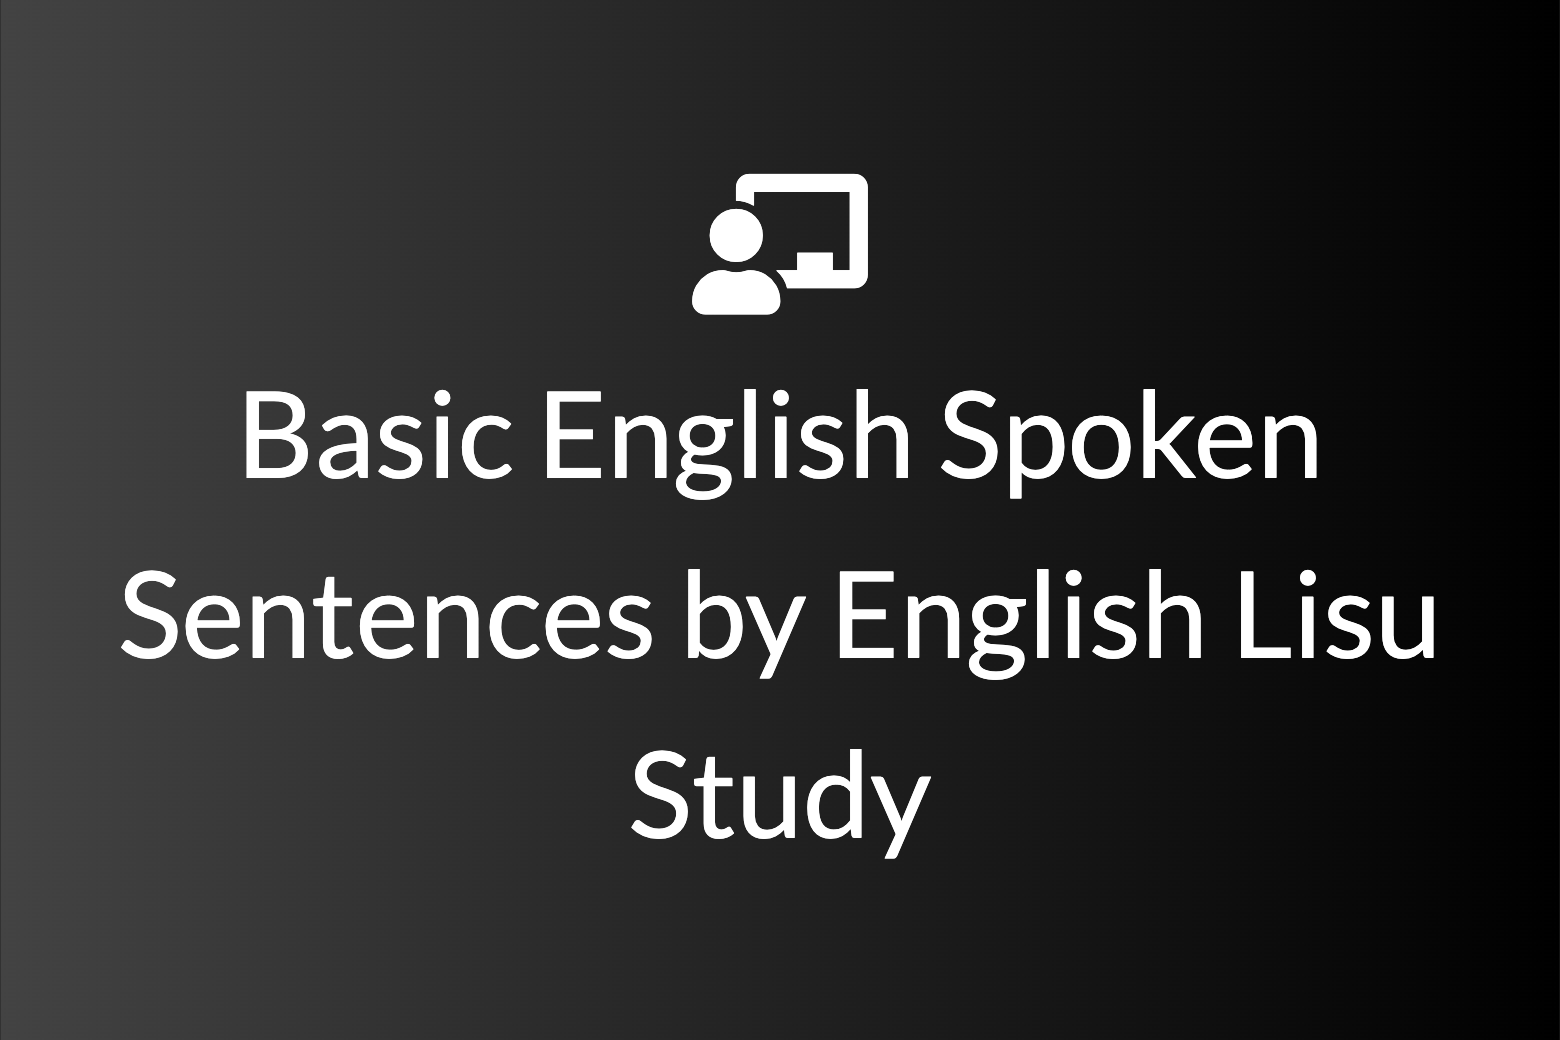 Basic English Spoken Sentences by English Lisu Study